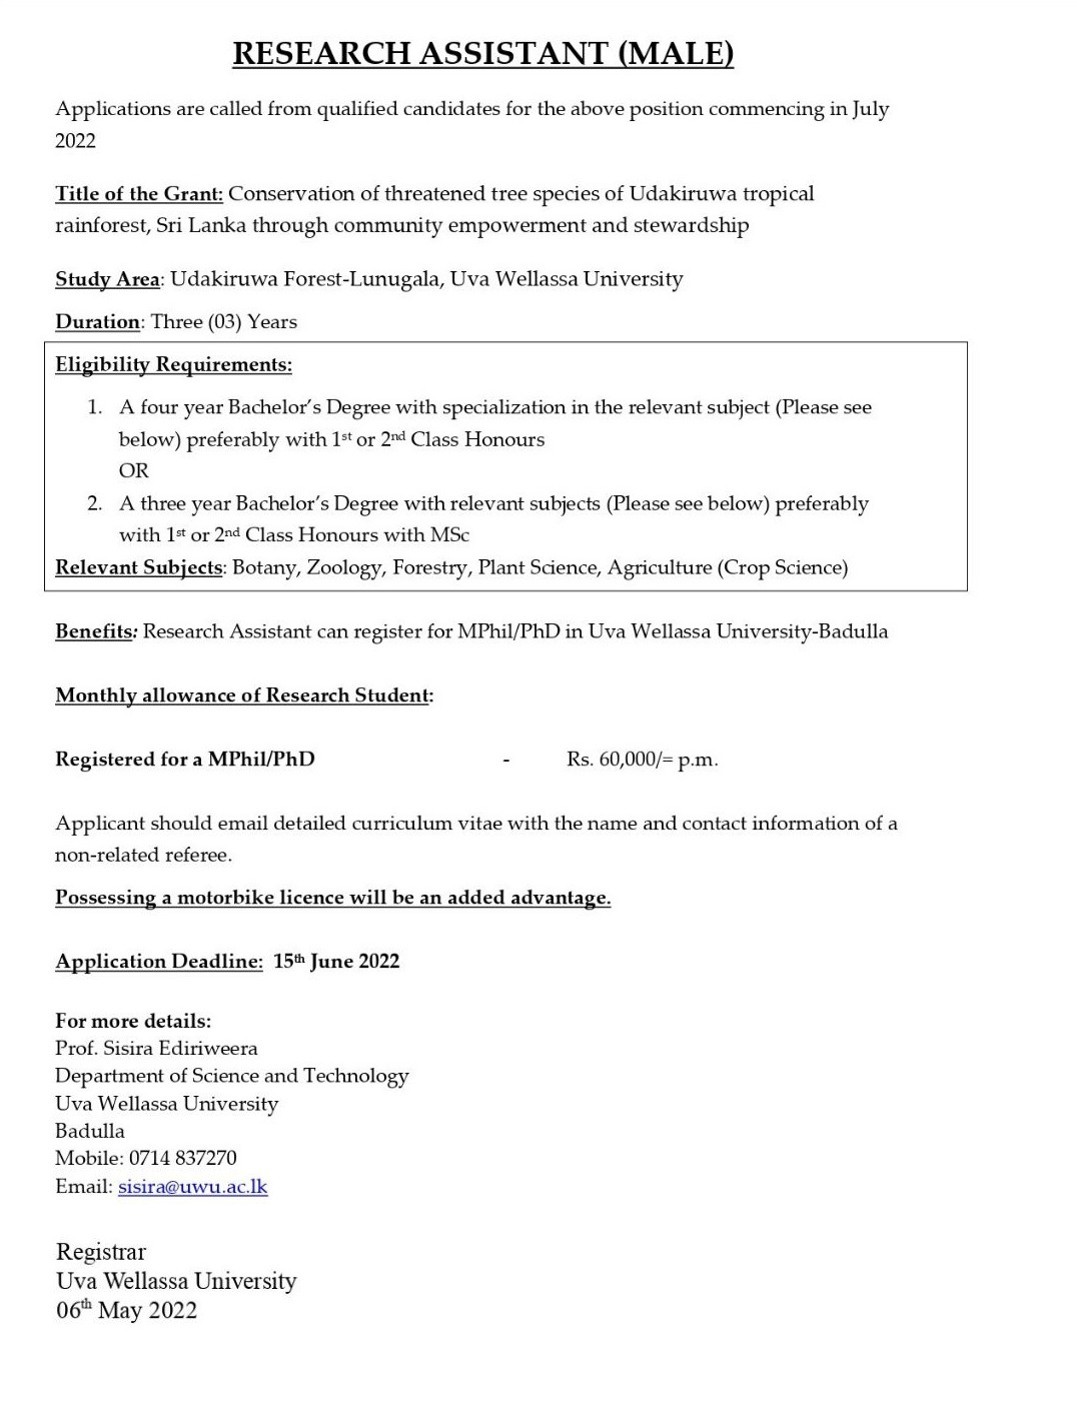 Research Assistant (Research Project) - Uva Wellassa University Vacancies 2022